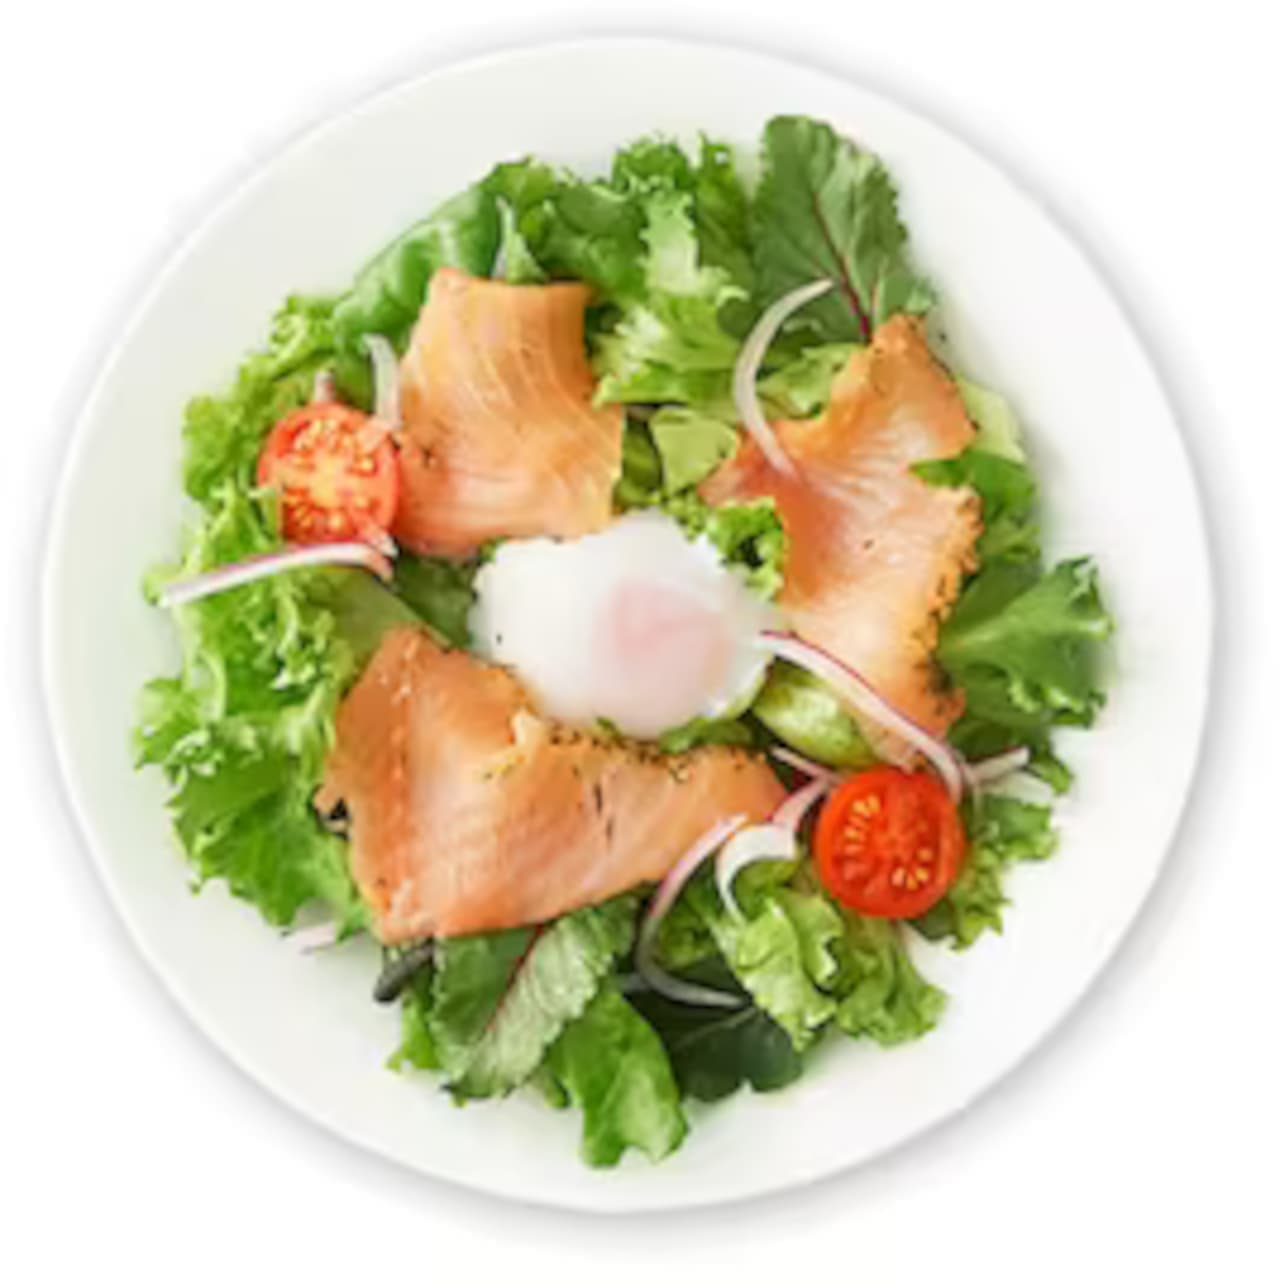 IKEA "Marinated Salmon Salad with Hot Eggs